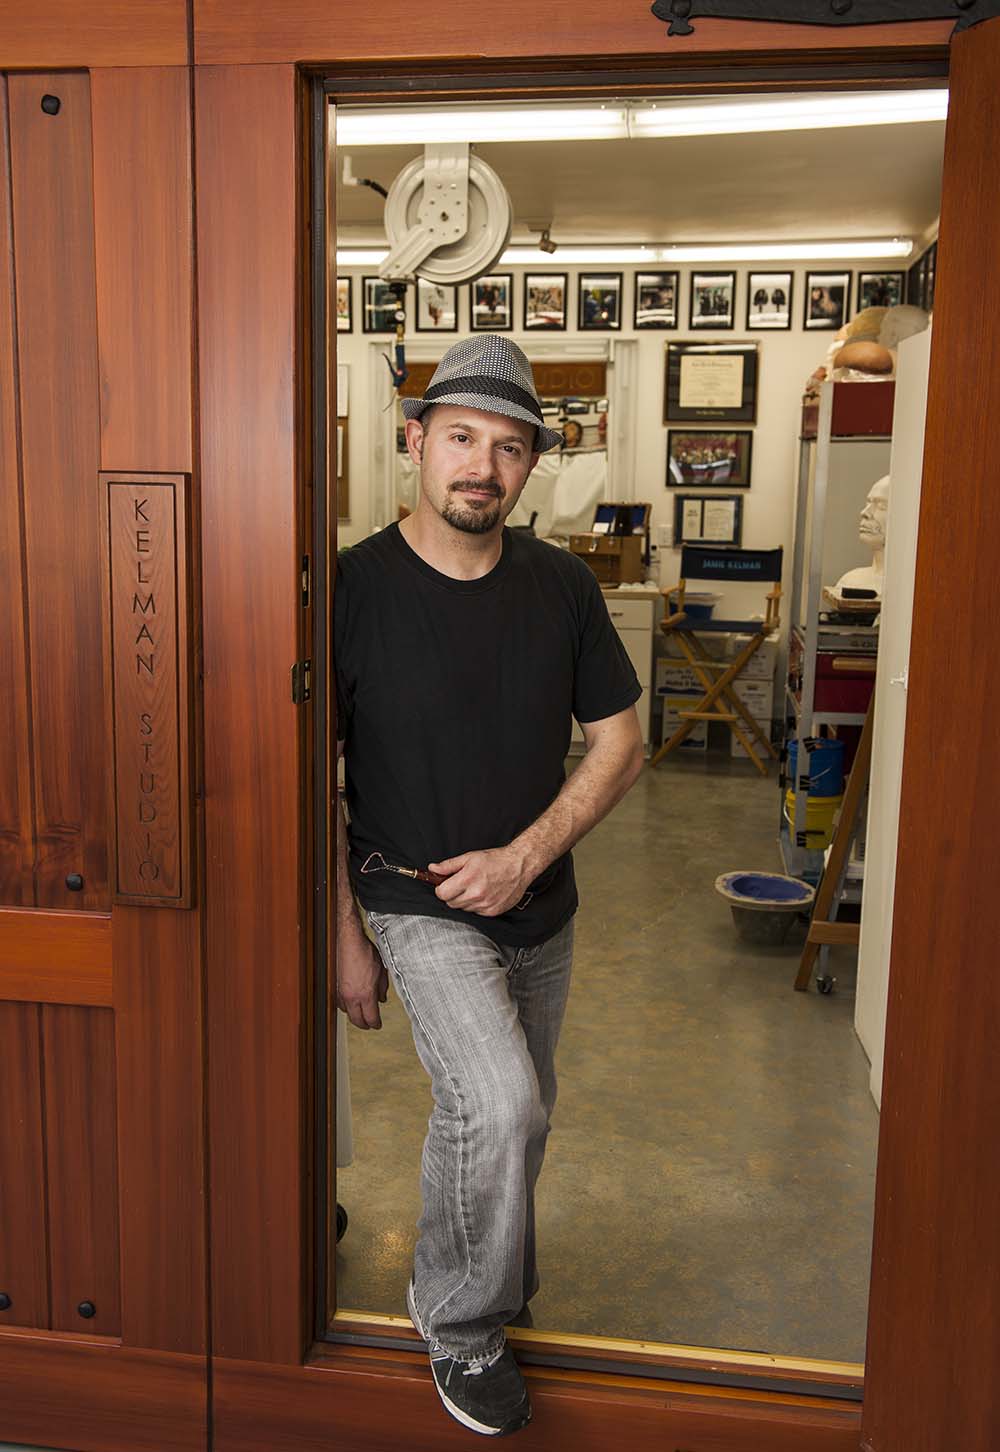 Jamie Kelman at his Kelman Studio. Los Angeles, CA. October 2014.